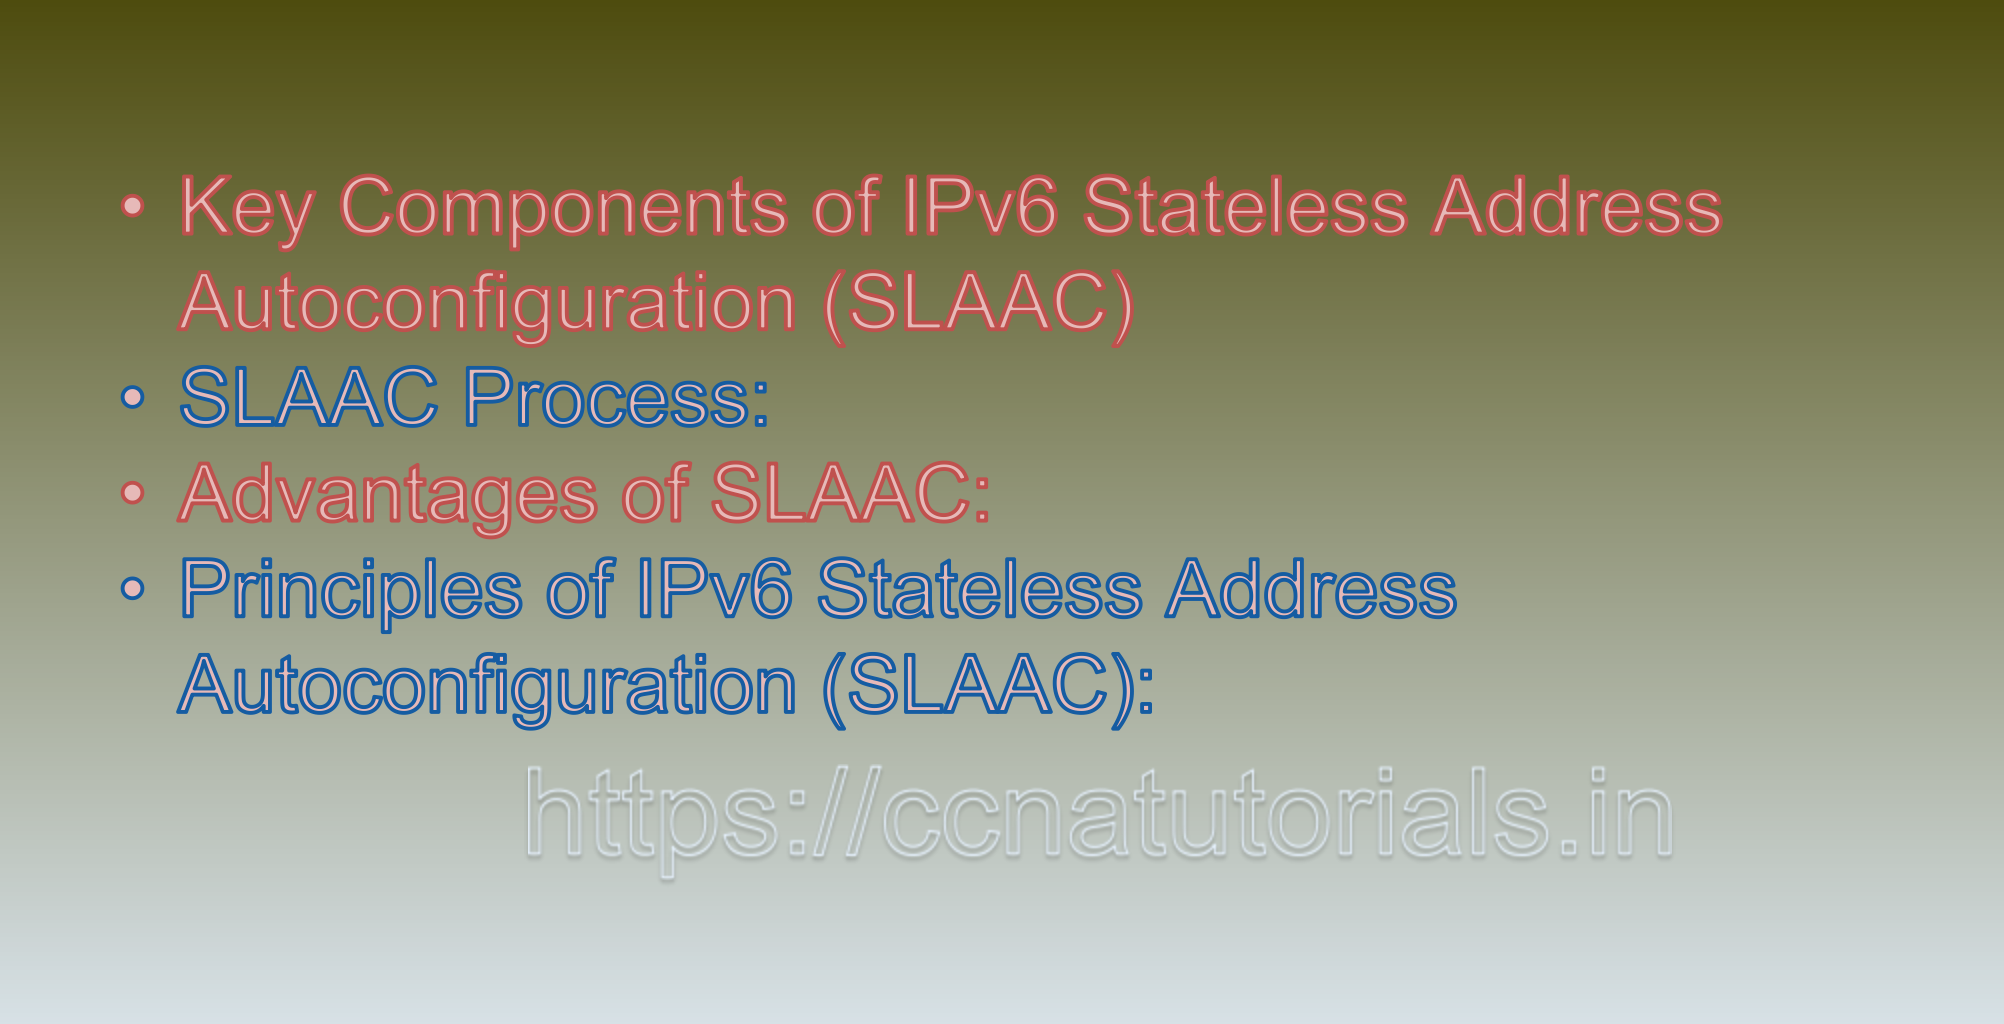 IPv6 Stateless Address Autoconfiguration (SLAAC)